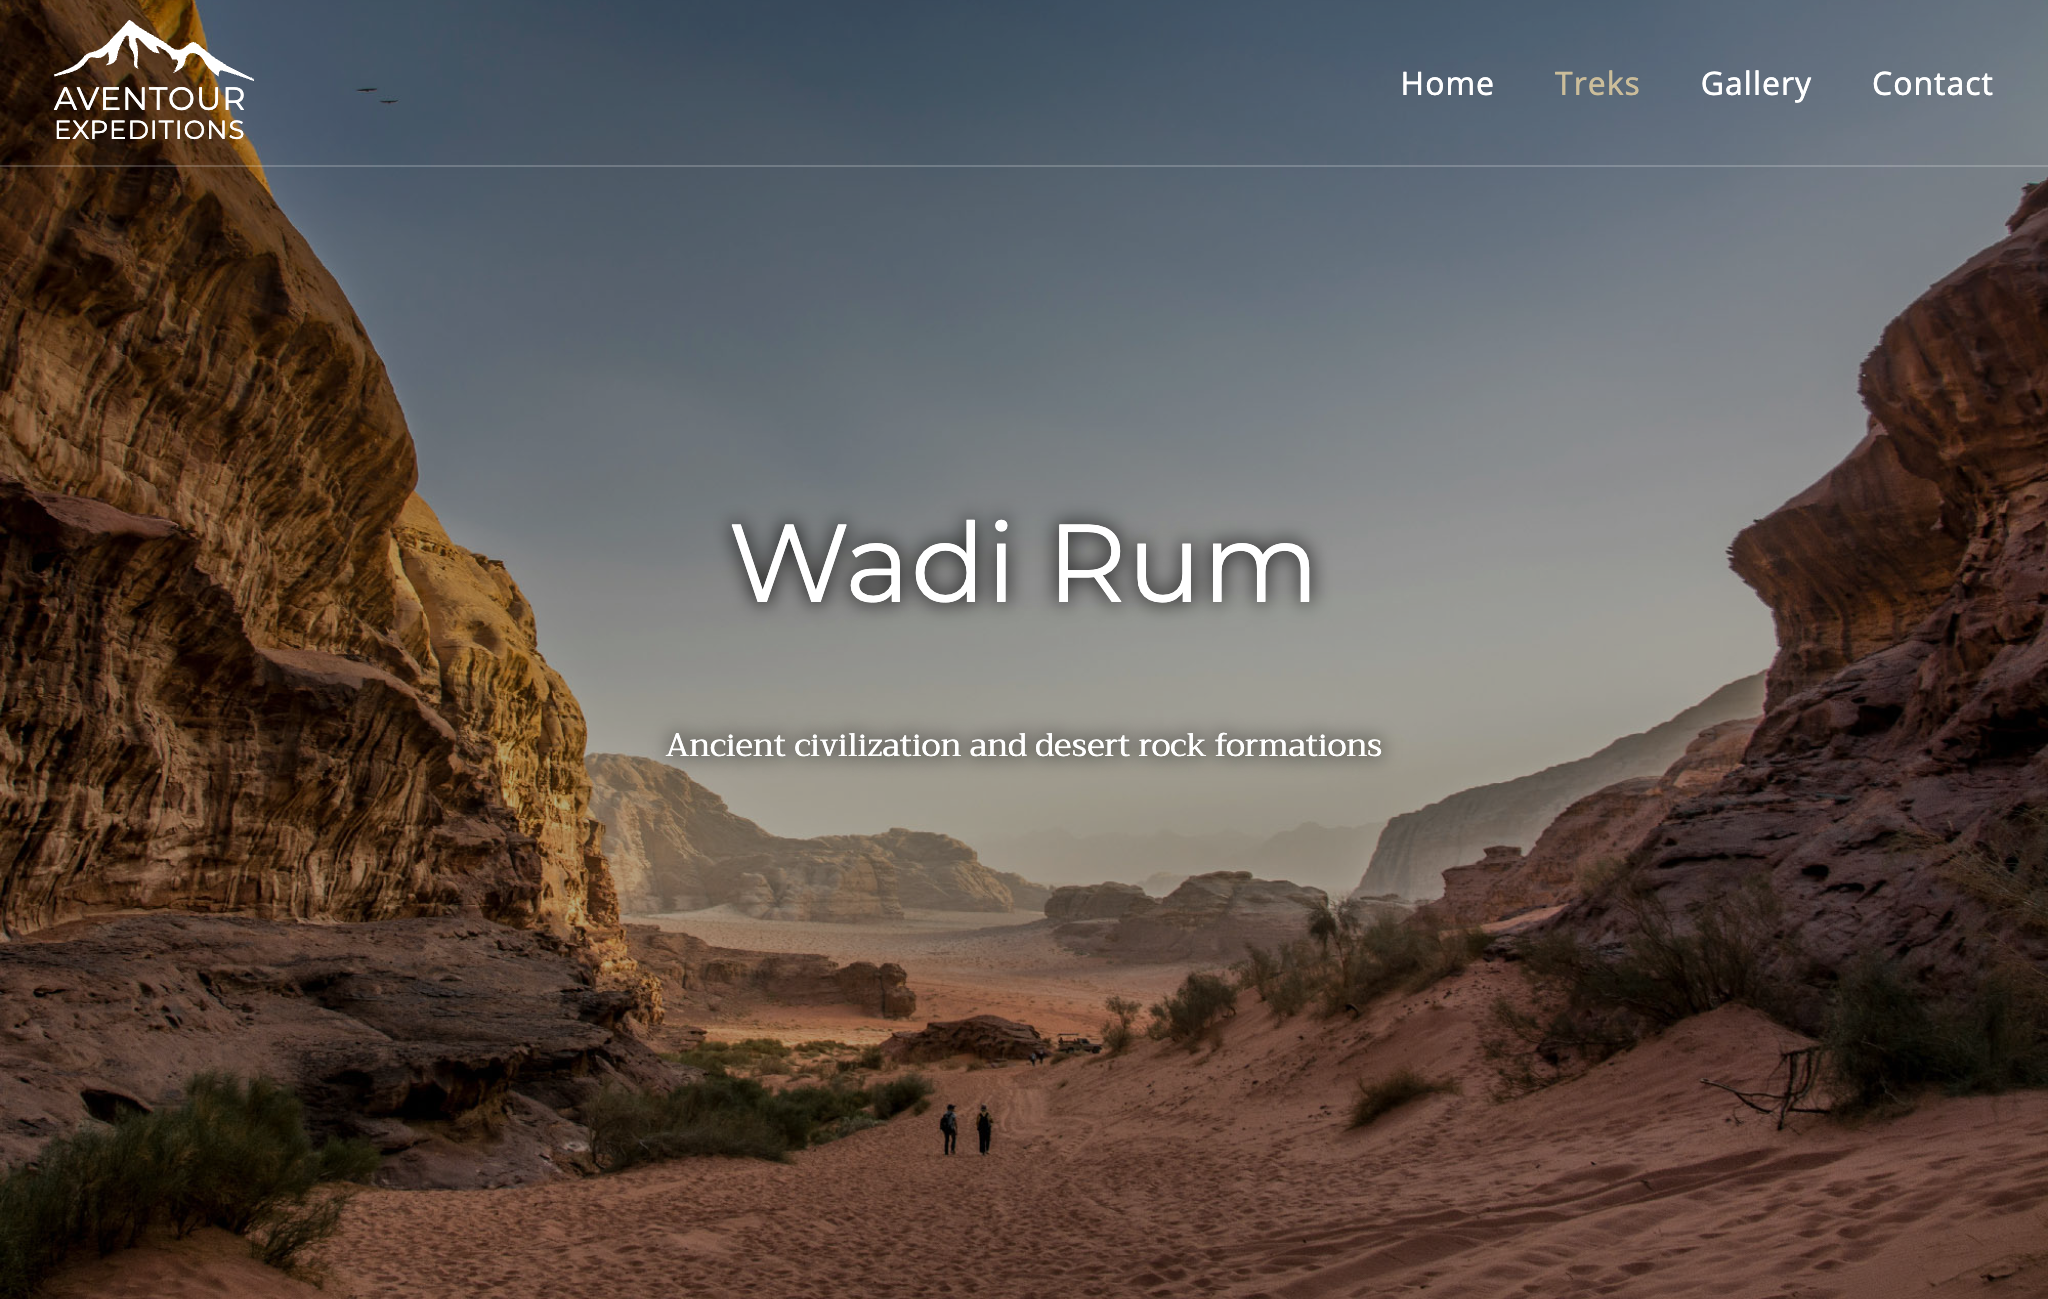 Page for a trek to the Wadi Rum desert in Jordan